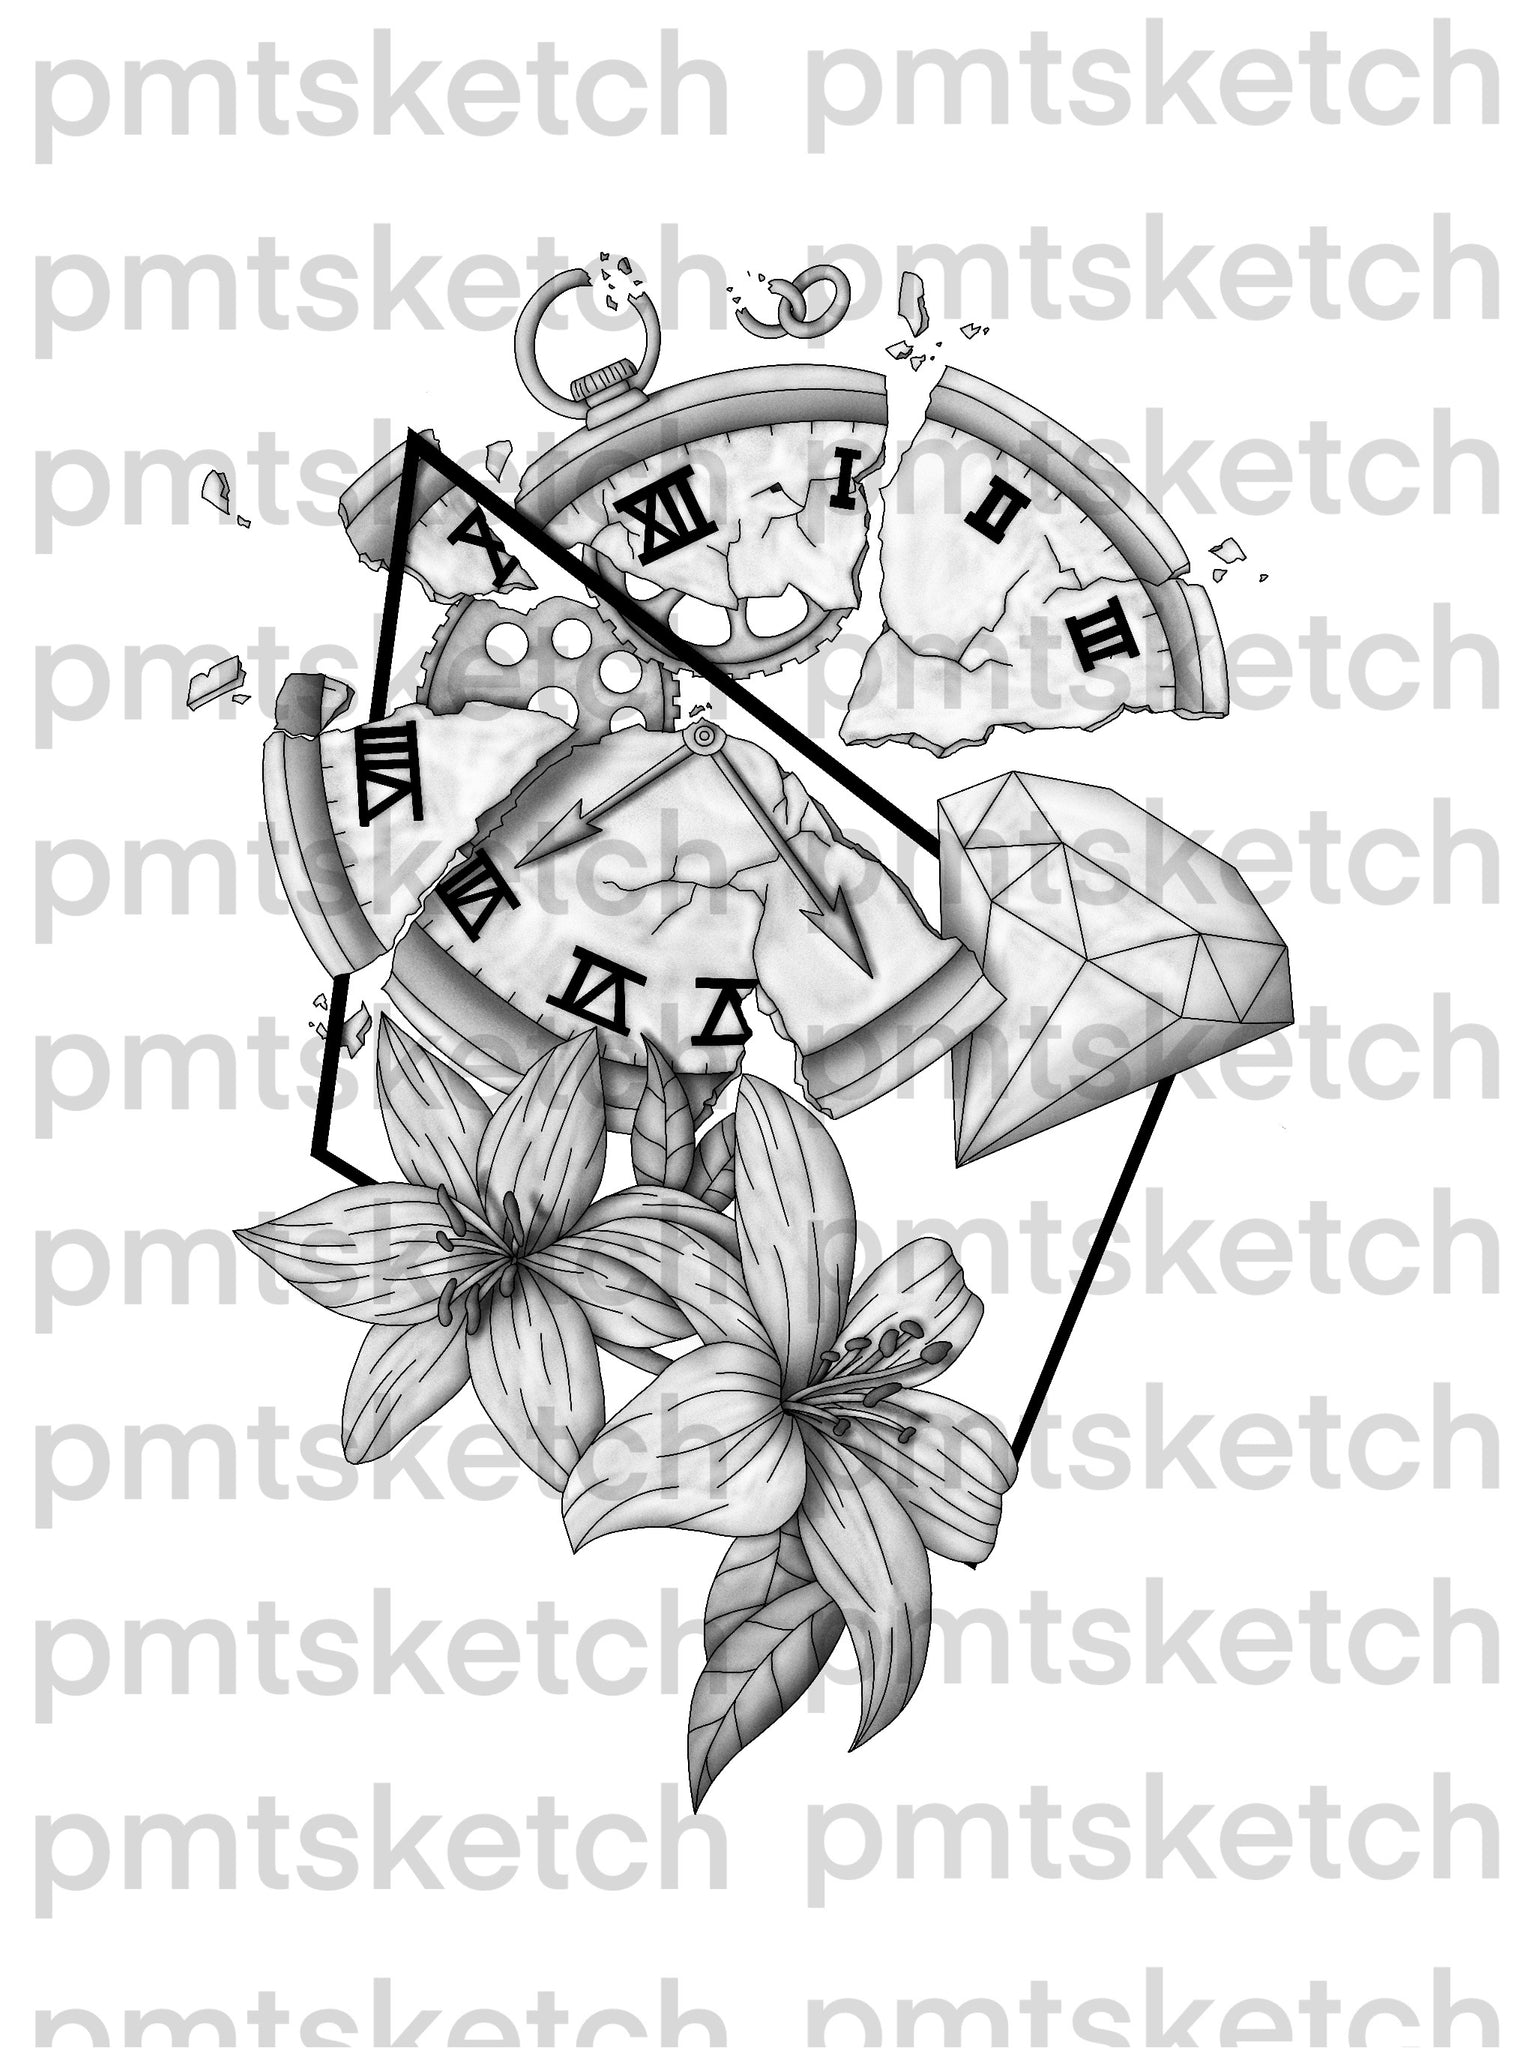 Broken clock  Dudebro  Drawings  Illustration Fantasy  Mythology  Other Fantasy  Mythology  ArtPal